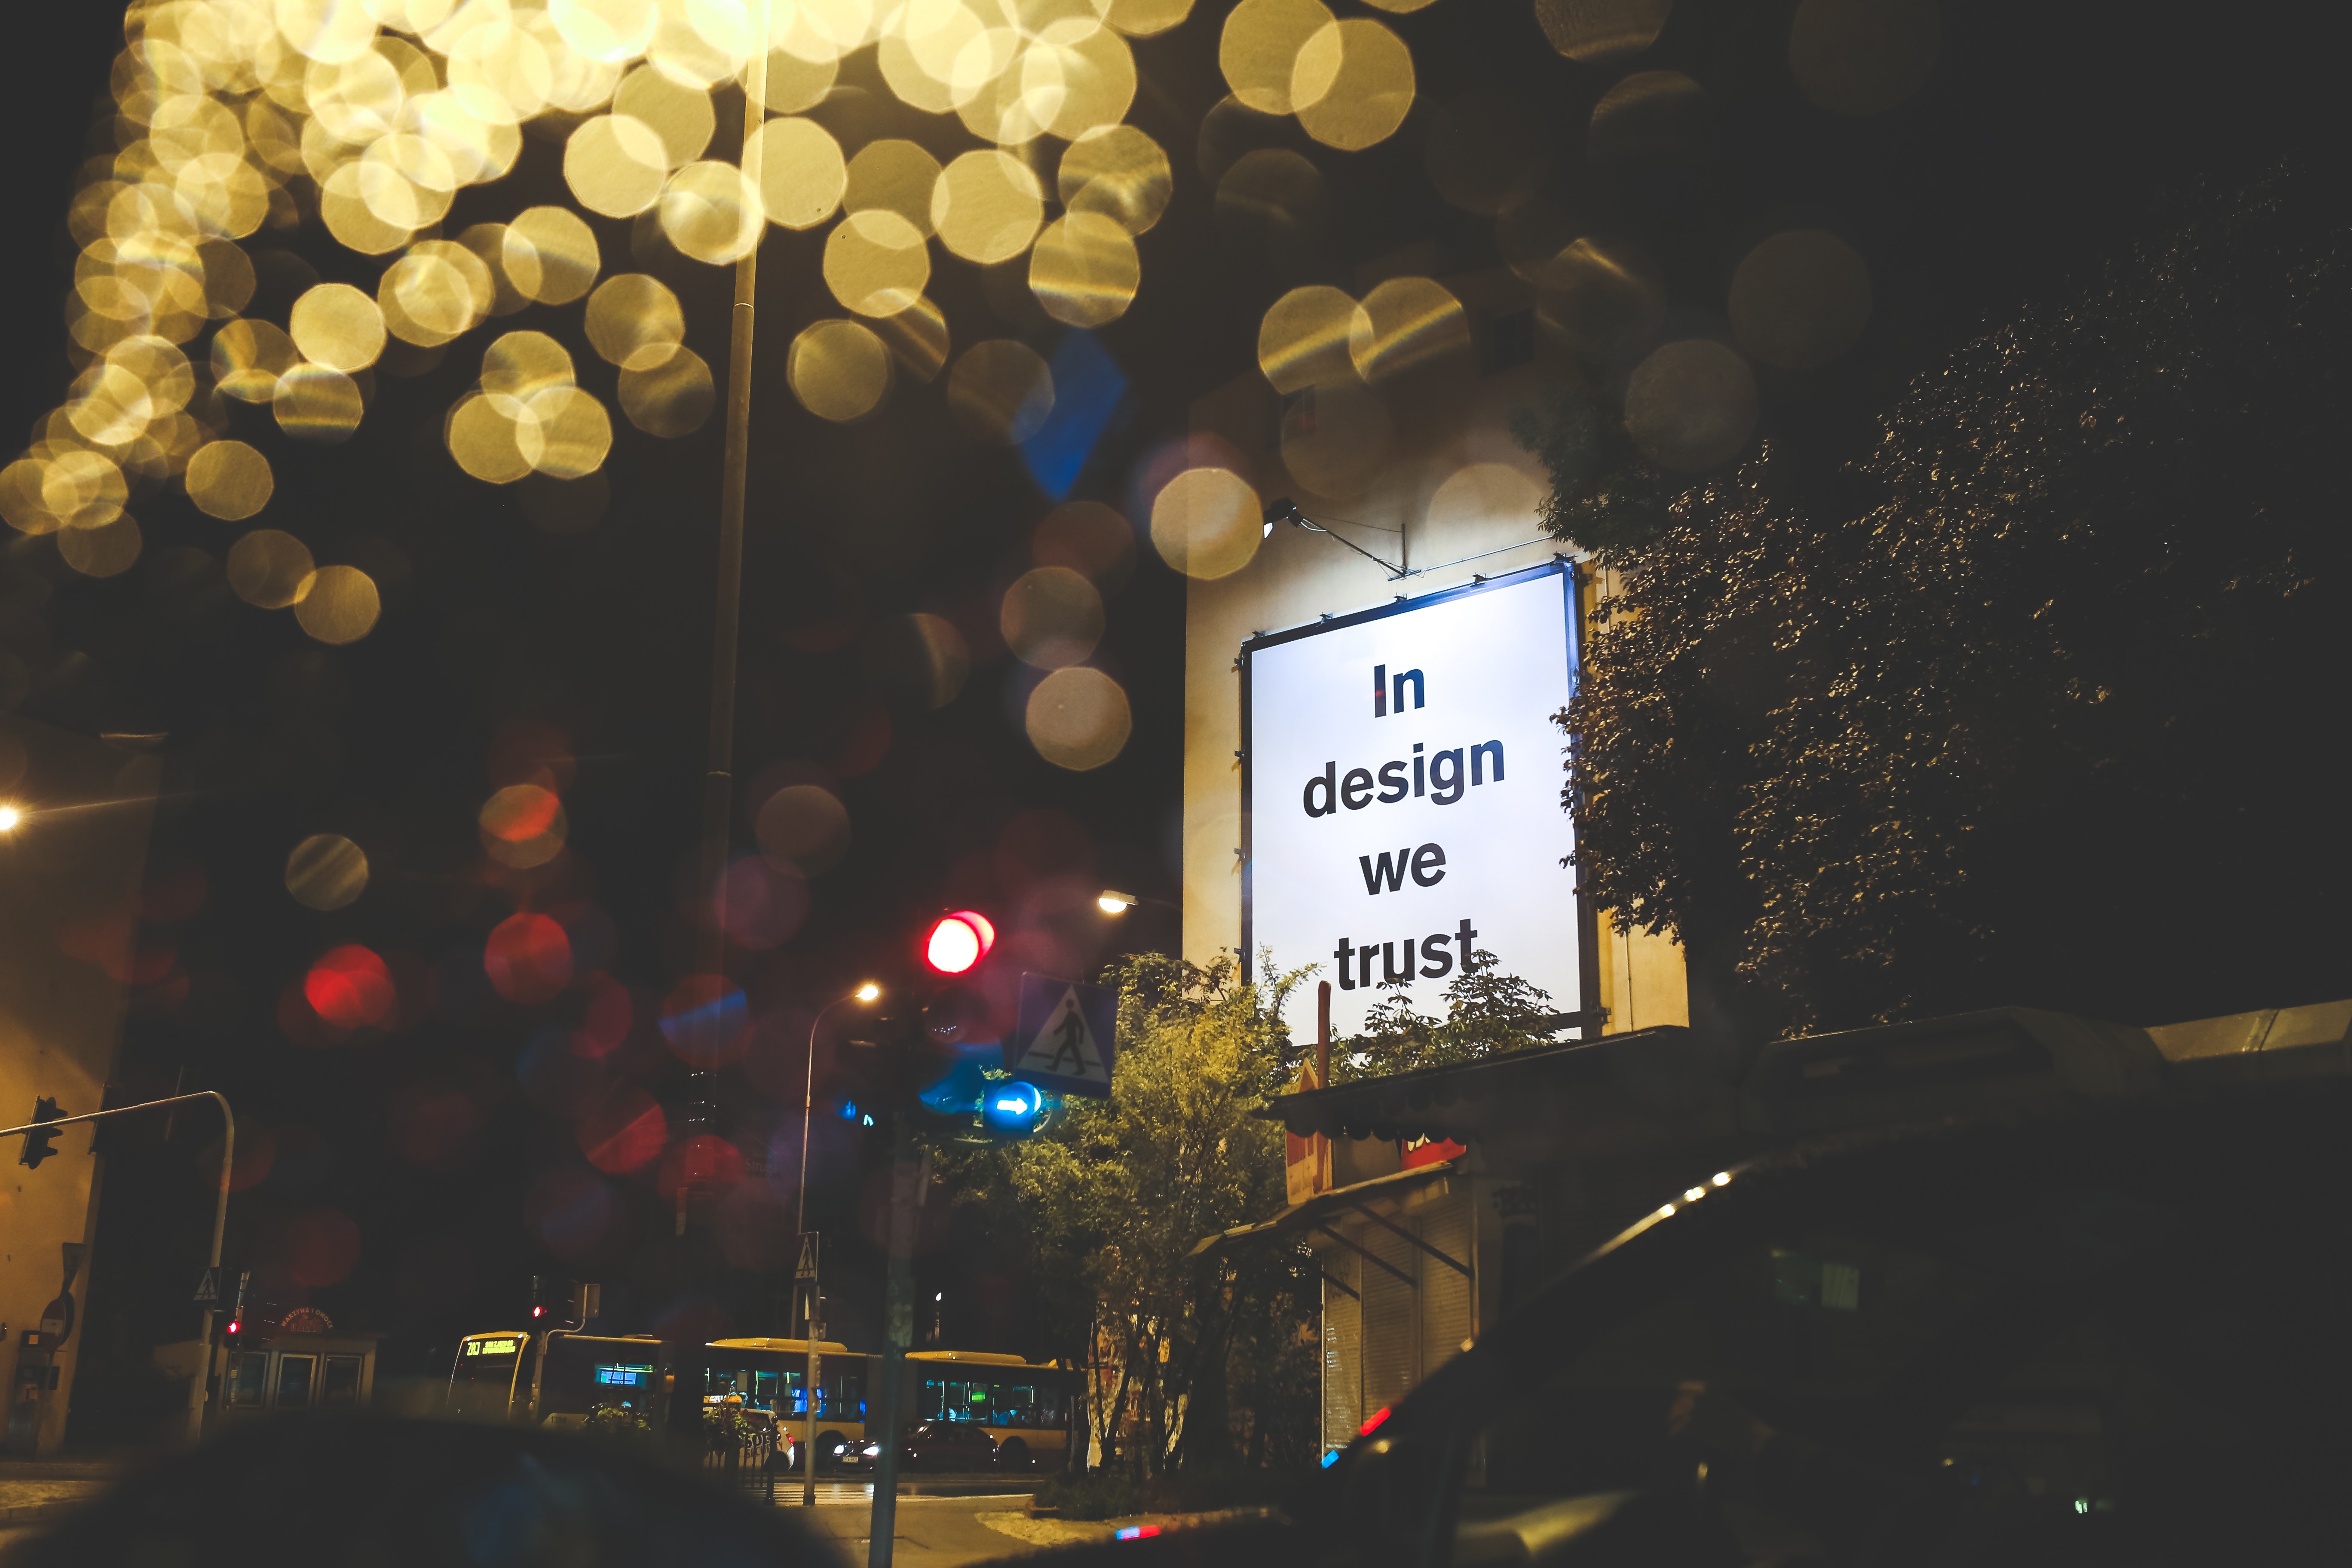 In design we trust / billboard photo